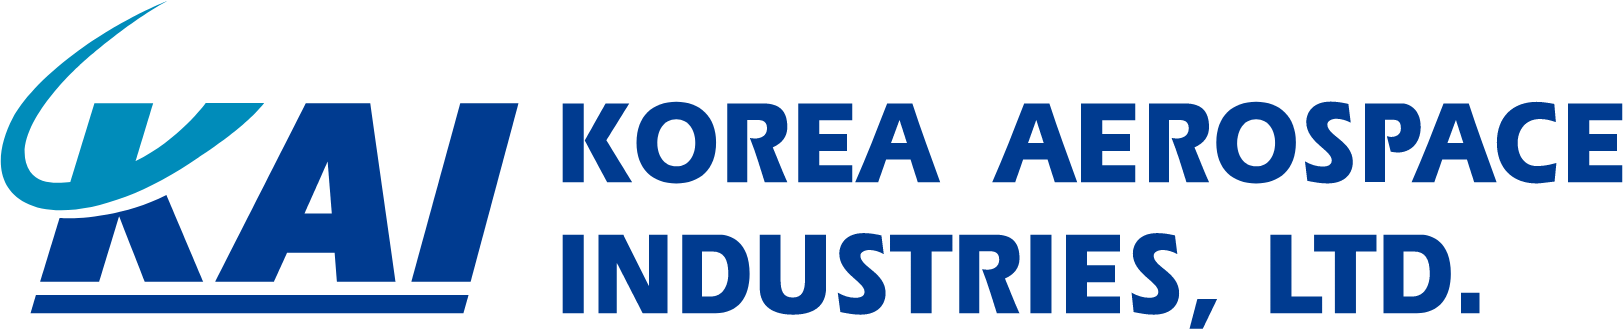 Korea Aerospace Industries logo large (transparent PNG)